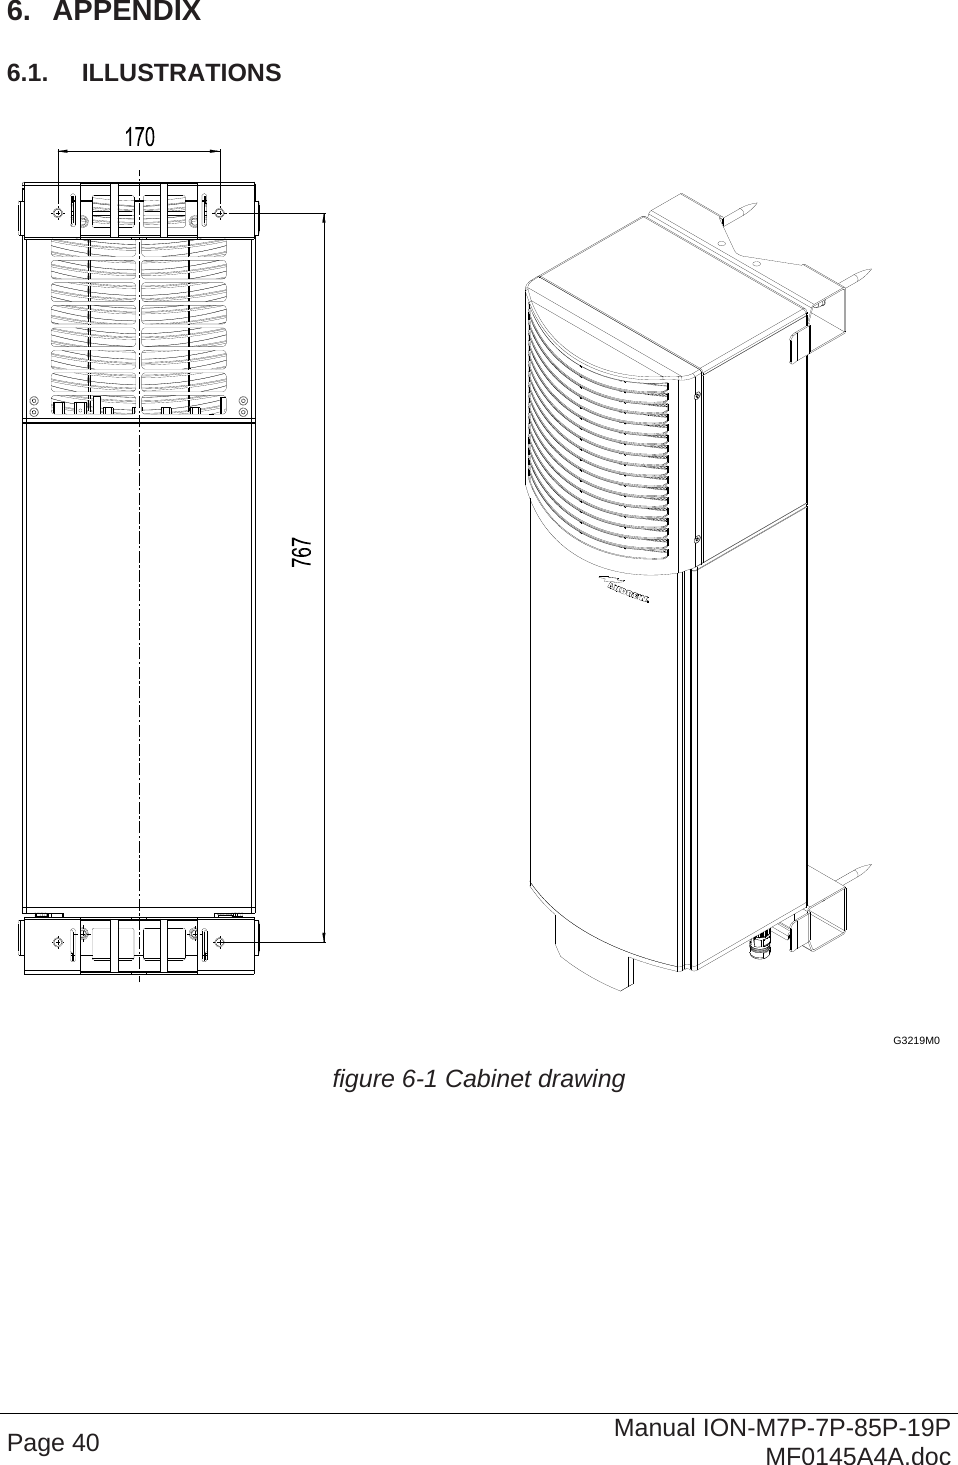  6.  APPENDIX 6.1.  ILLUSTRATIONS  G3219M0  figure 6-1 Cabinet drawing  Page 40  Manual ION-M7P-7P-85P-19P MF0145A4A.doc 